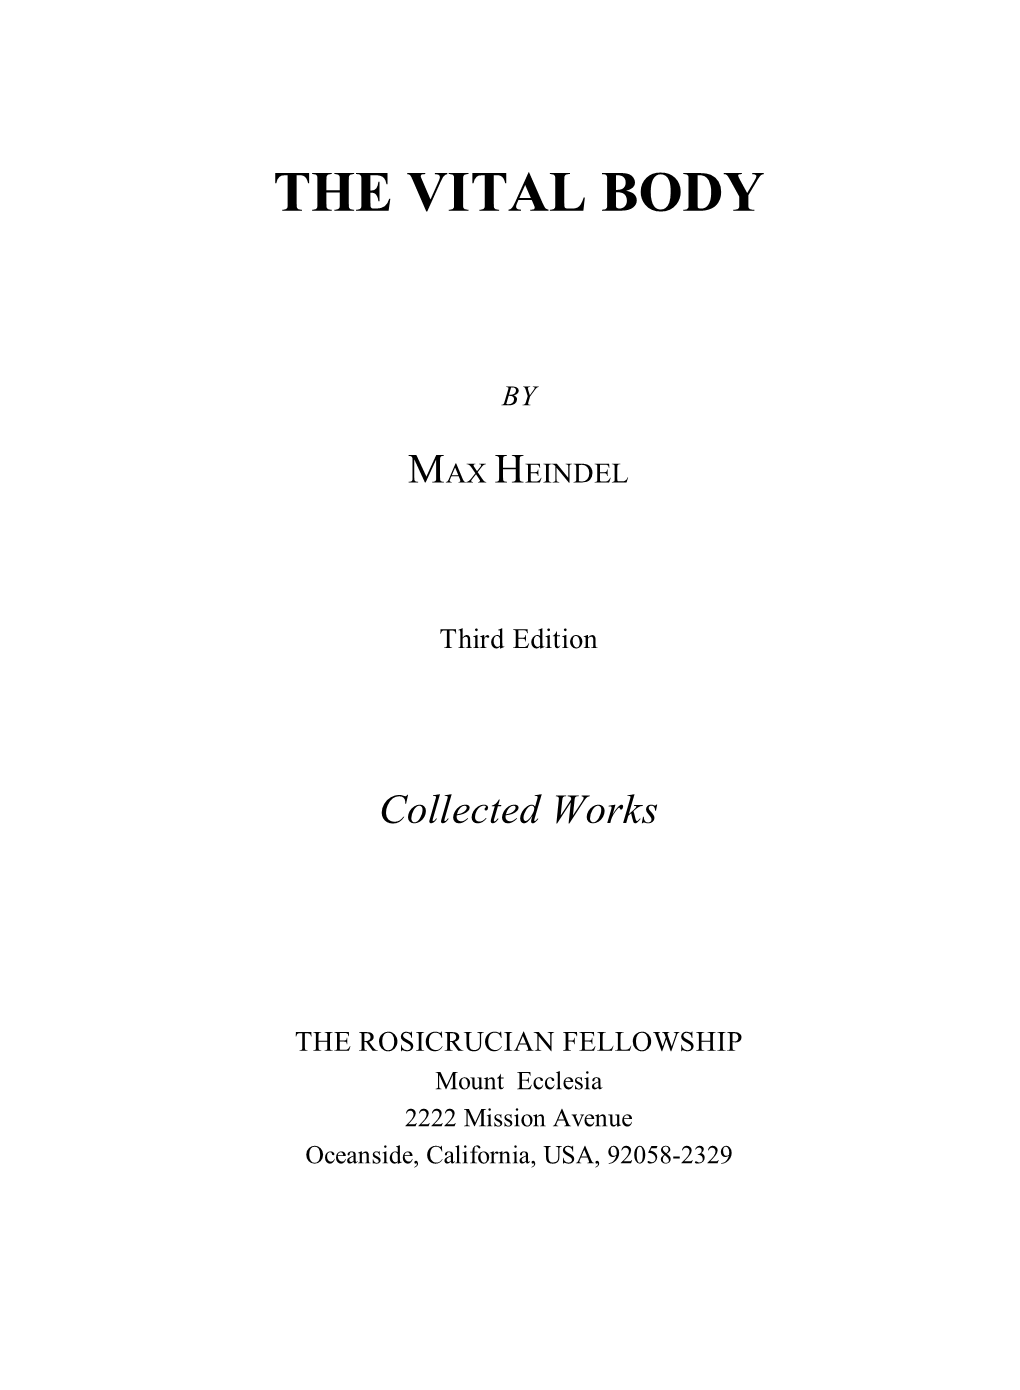 The Vital Body